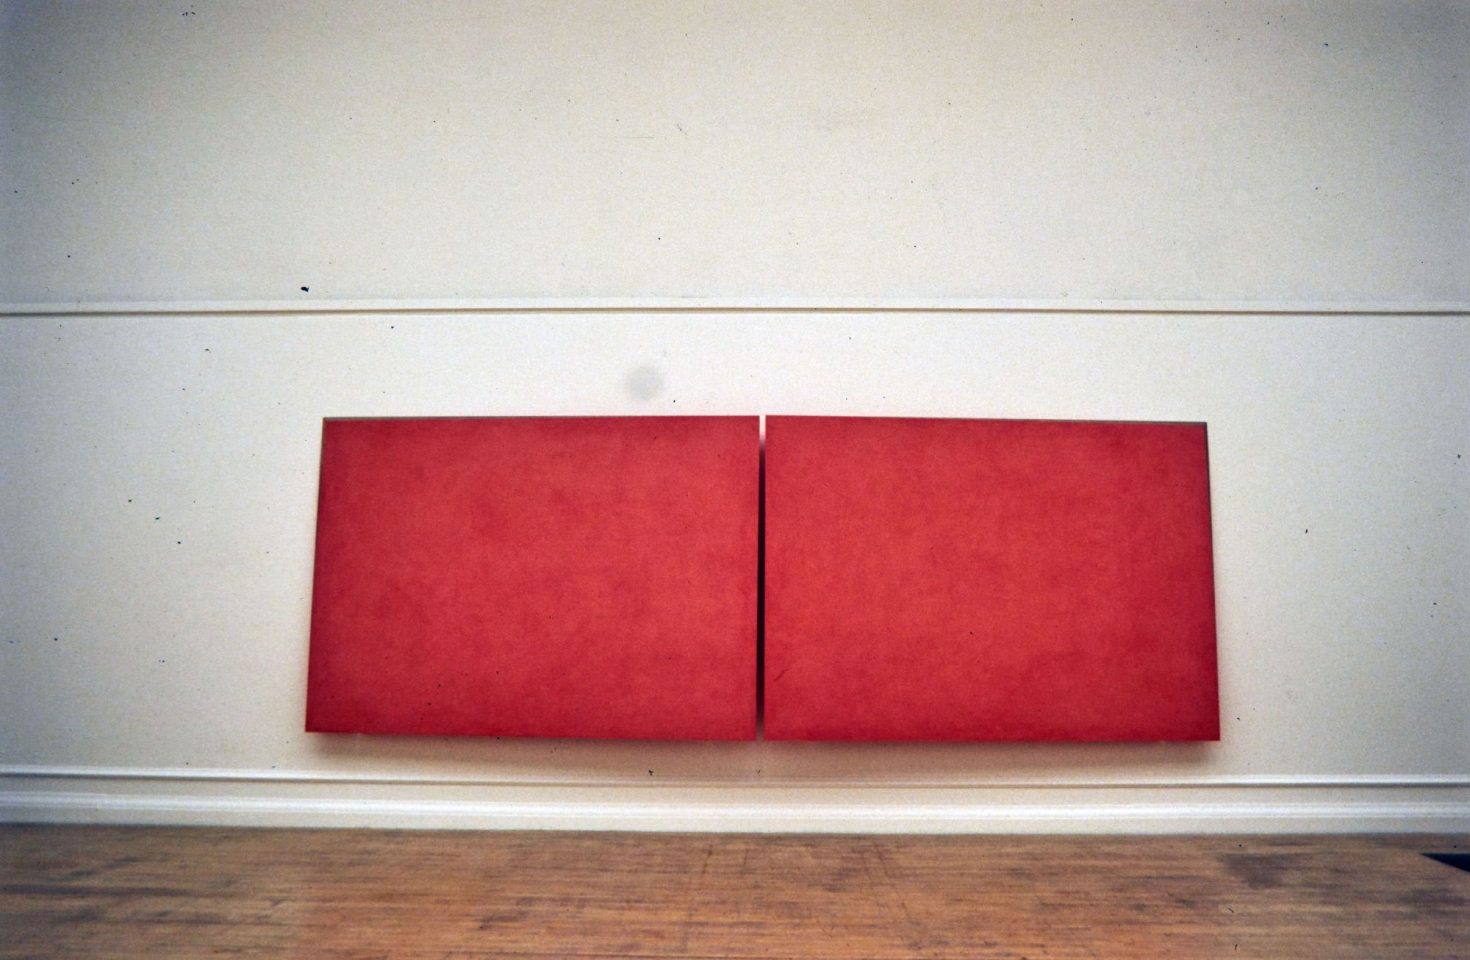 Installation view of Ettore Spalletti 1995 exhibition.
